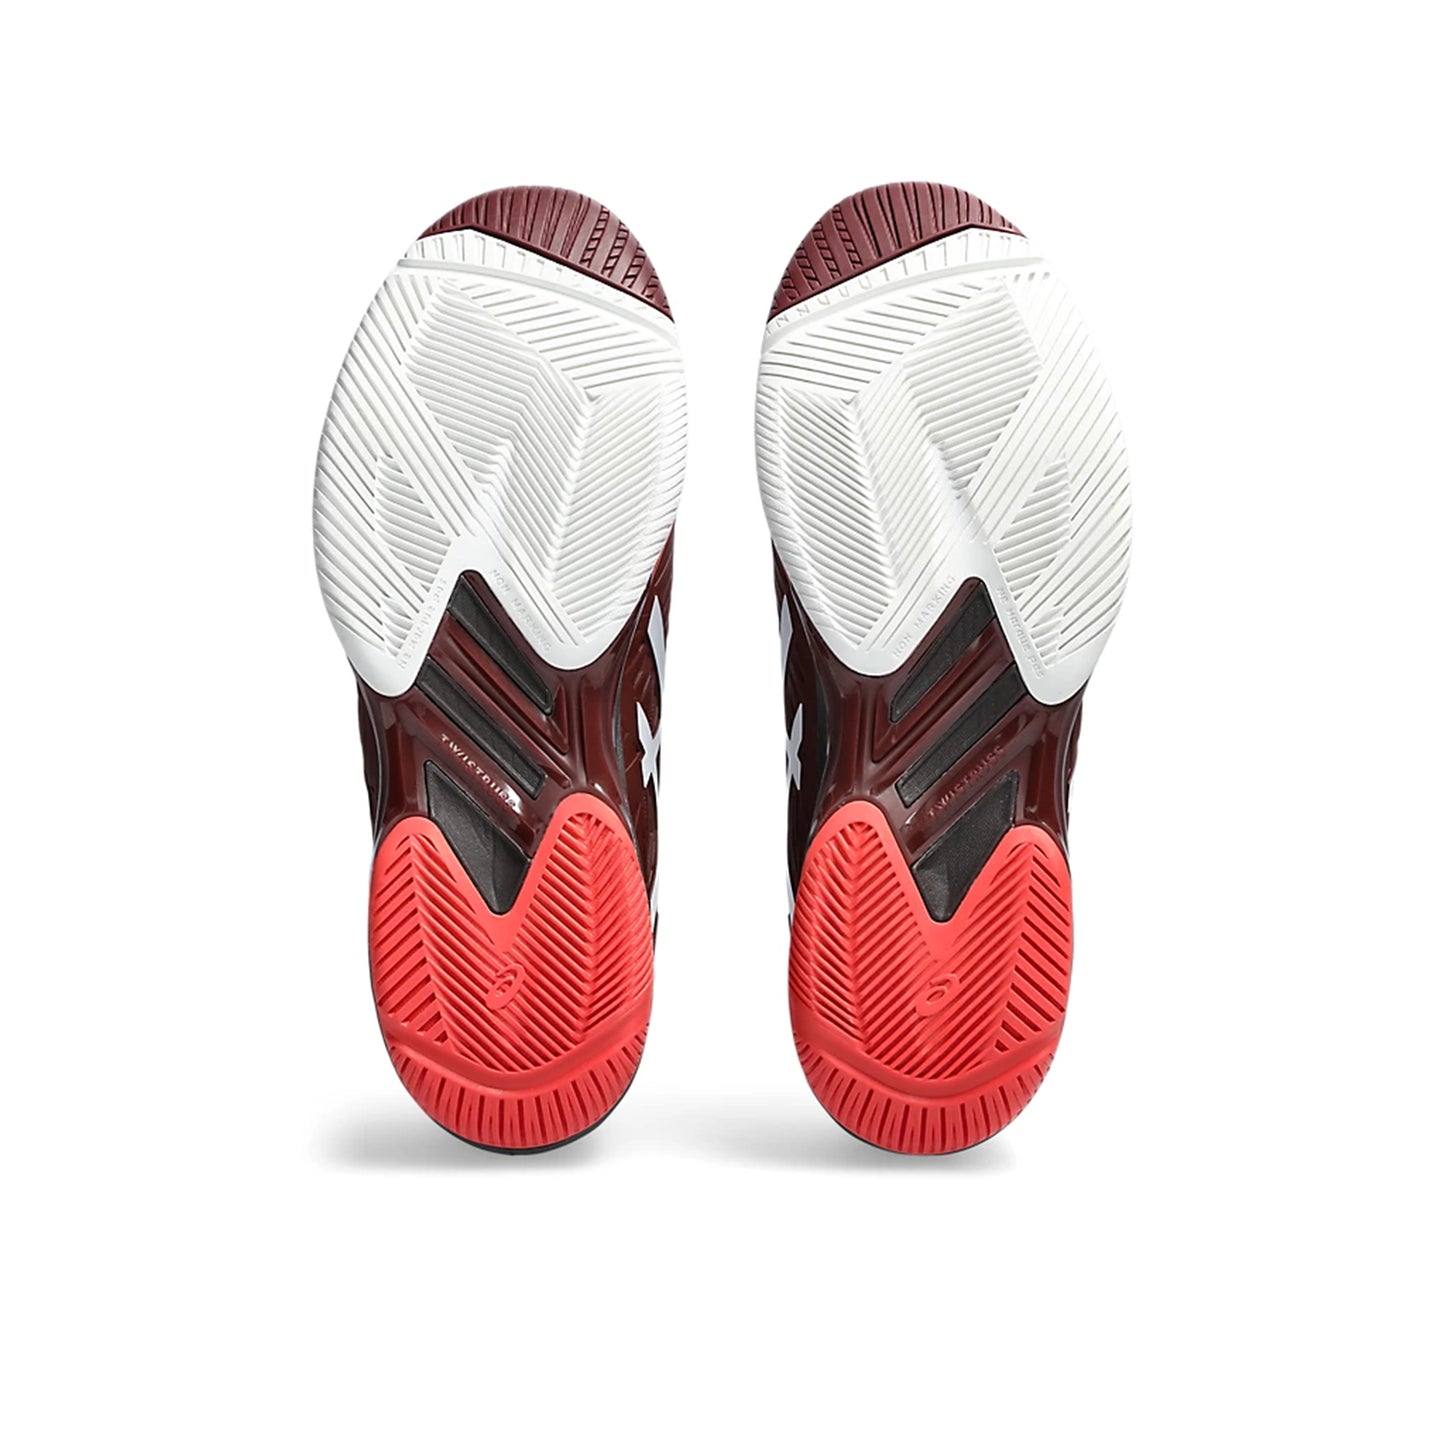 Asics Solution Speed FF 2 Men's Tennis Shoes - Antique Red/White - Best Price online Prokicksports.com